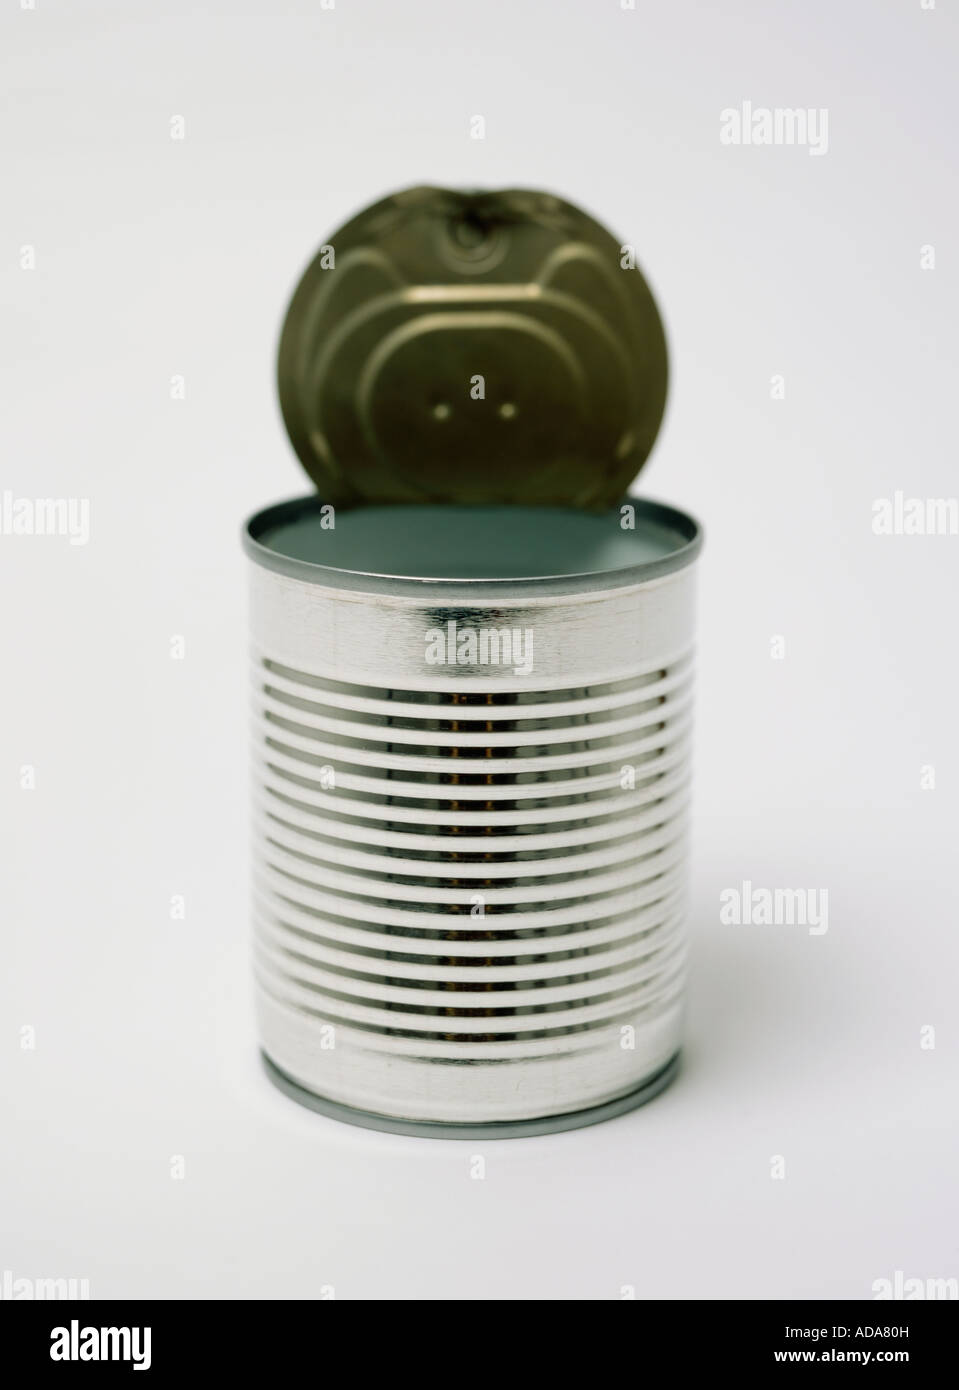 Tin can on white background Stock Photo